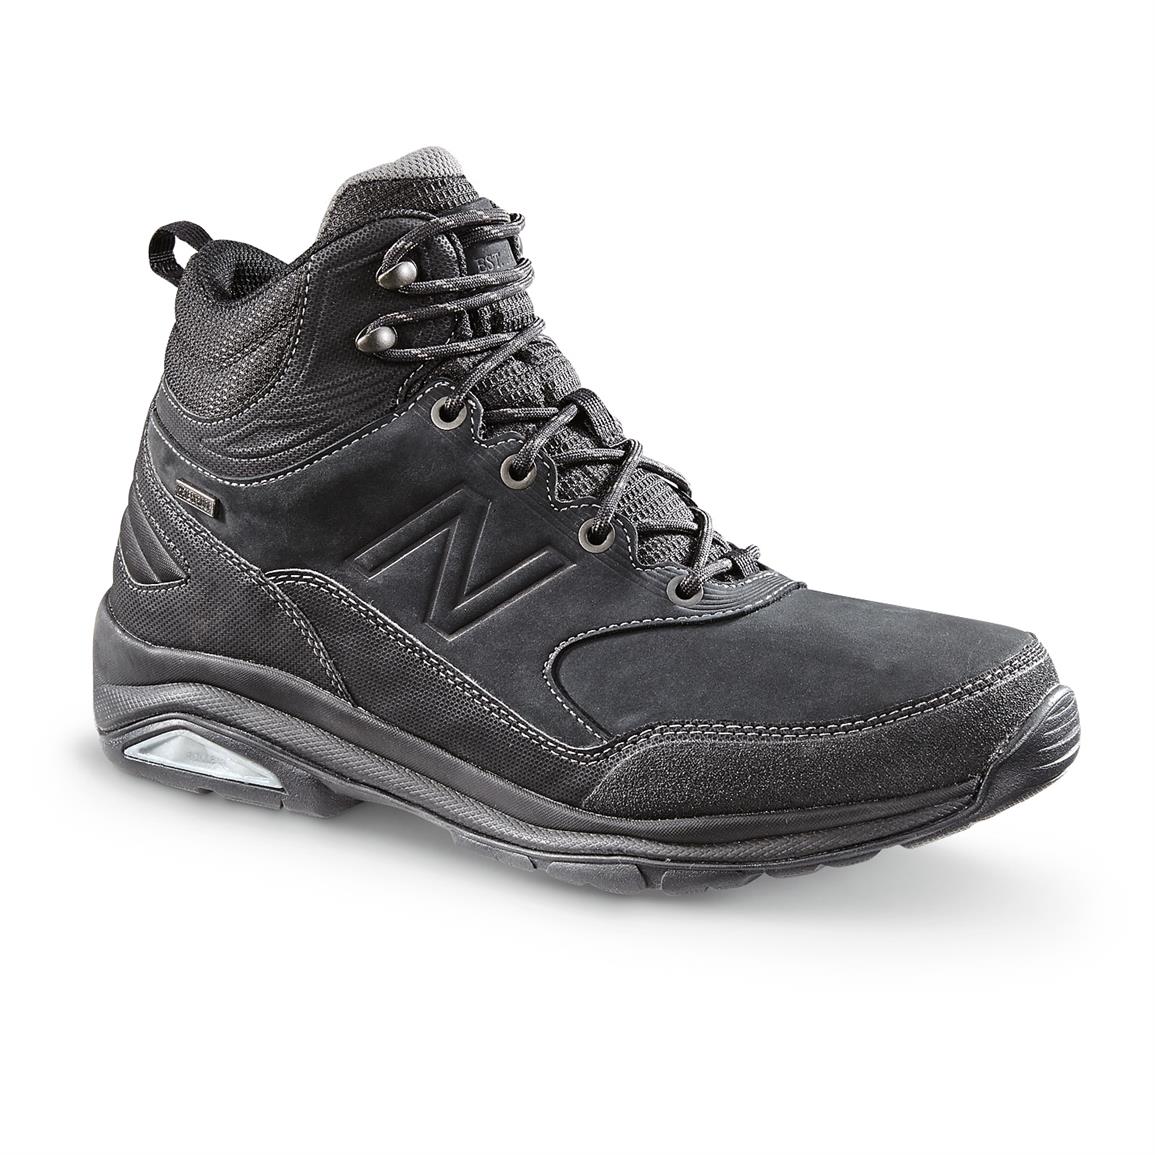 New Balance 1400v1 Hiking Boots 